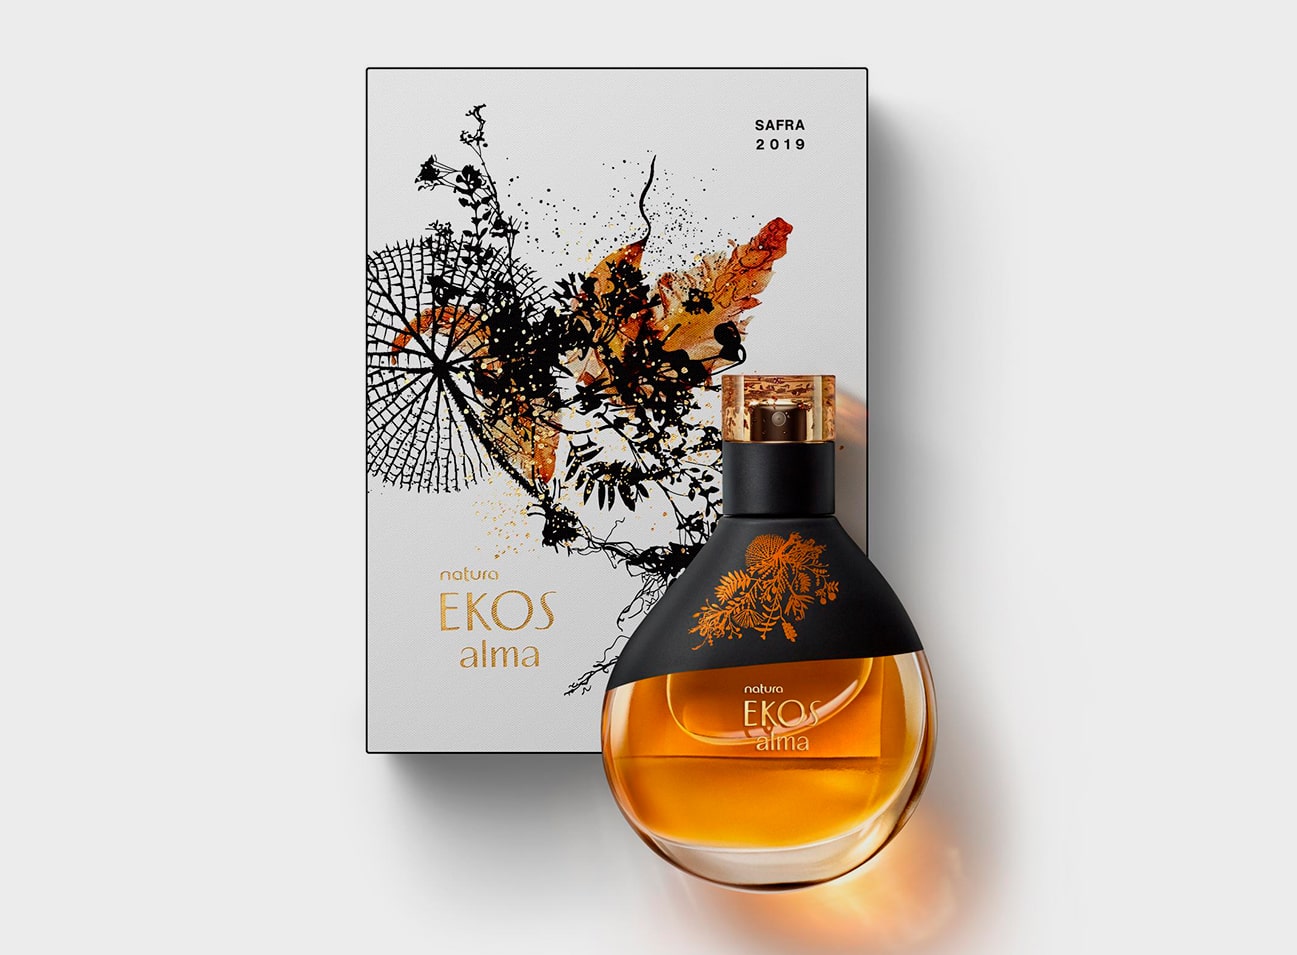 Ekos Alma, a new Natura fragrance